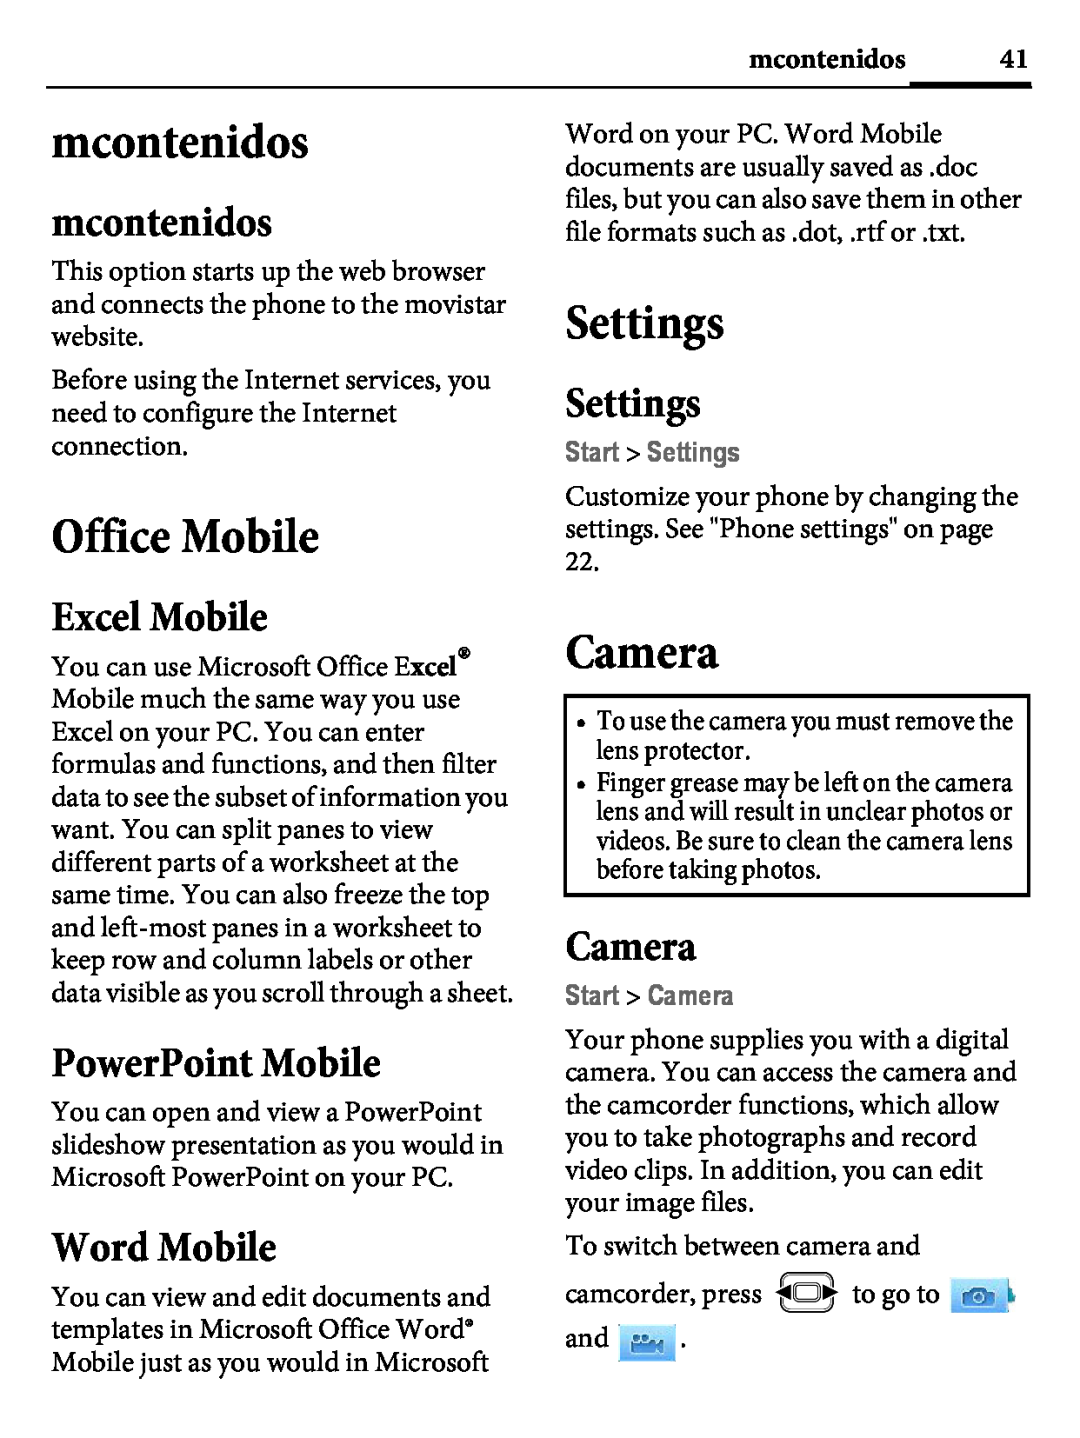 Kyocera E4000 mcontenidos, Office Mobile, Settings, Excel Mobile, PowerPoint Mobile, Word Mobile, Start Camera 